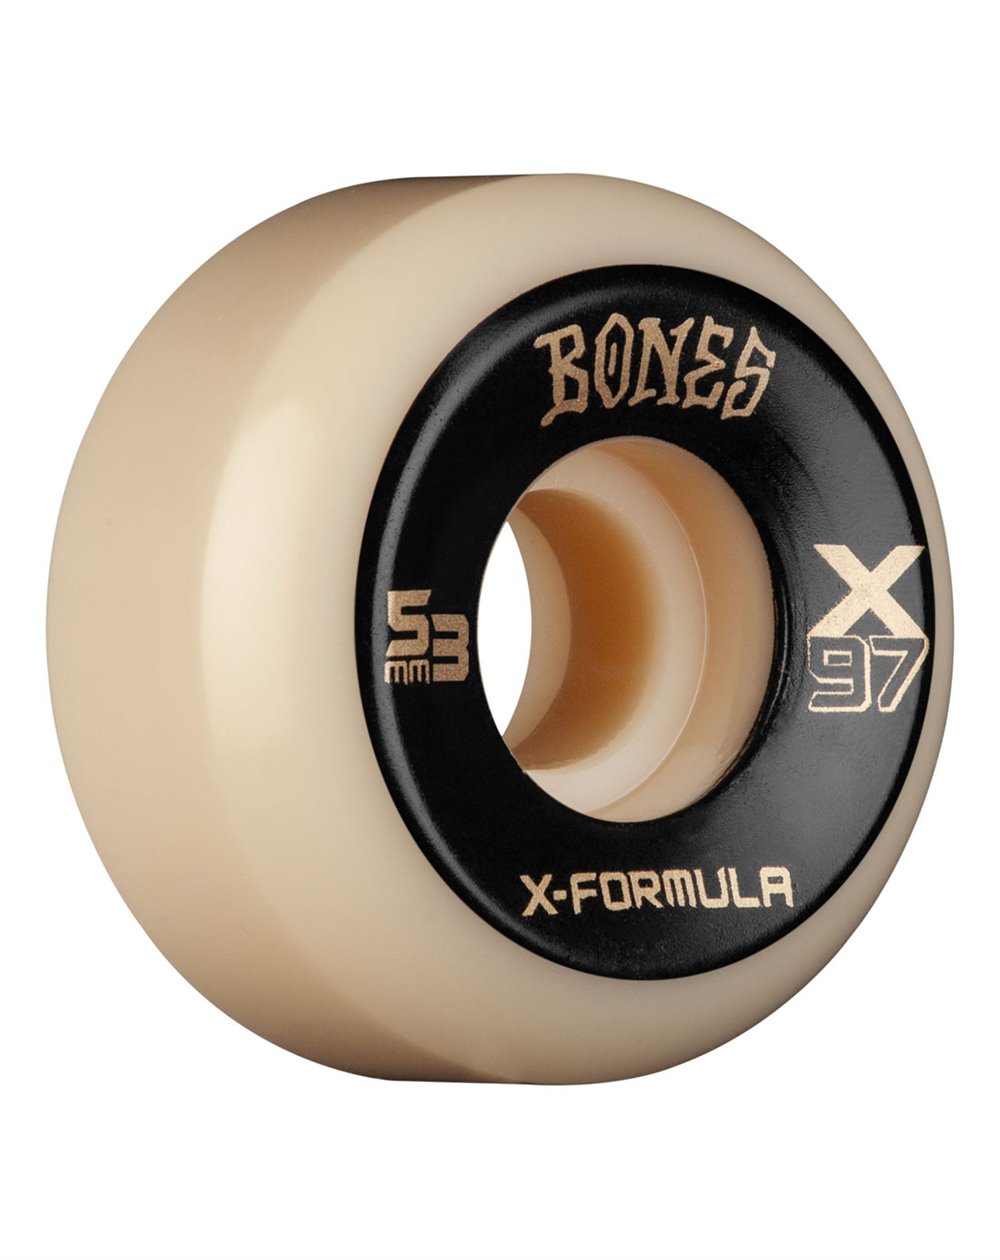 Bones Wheels Roues Skateboard X-Formula V5 Sidecut X-Ninety-Seven 53mm 97A 4 pc